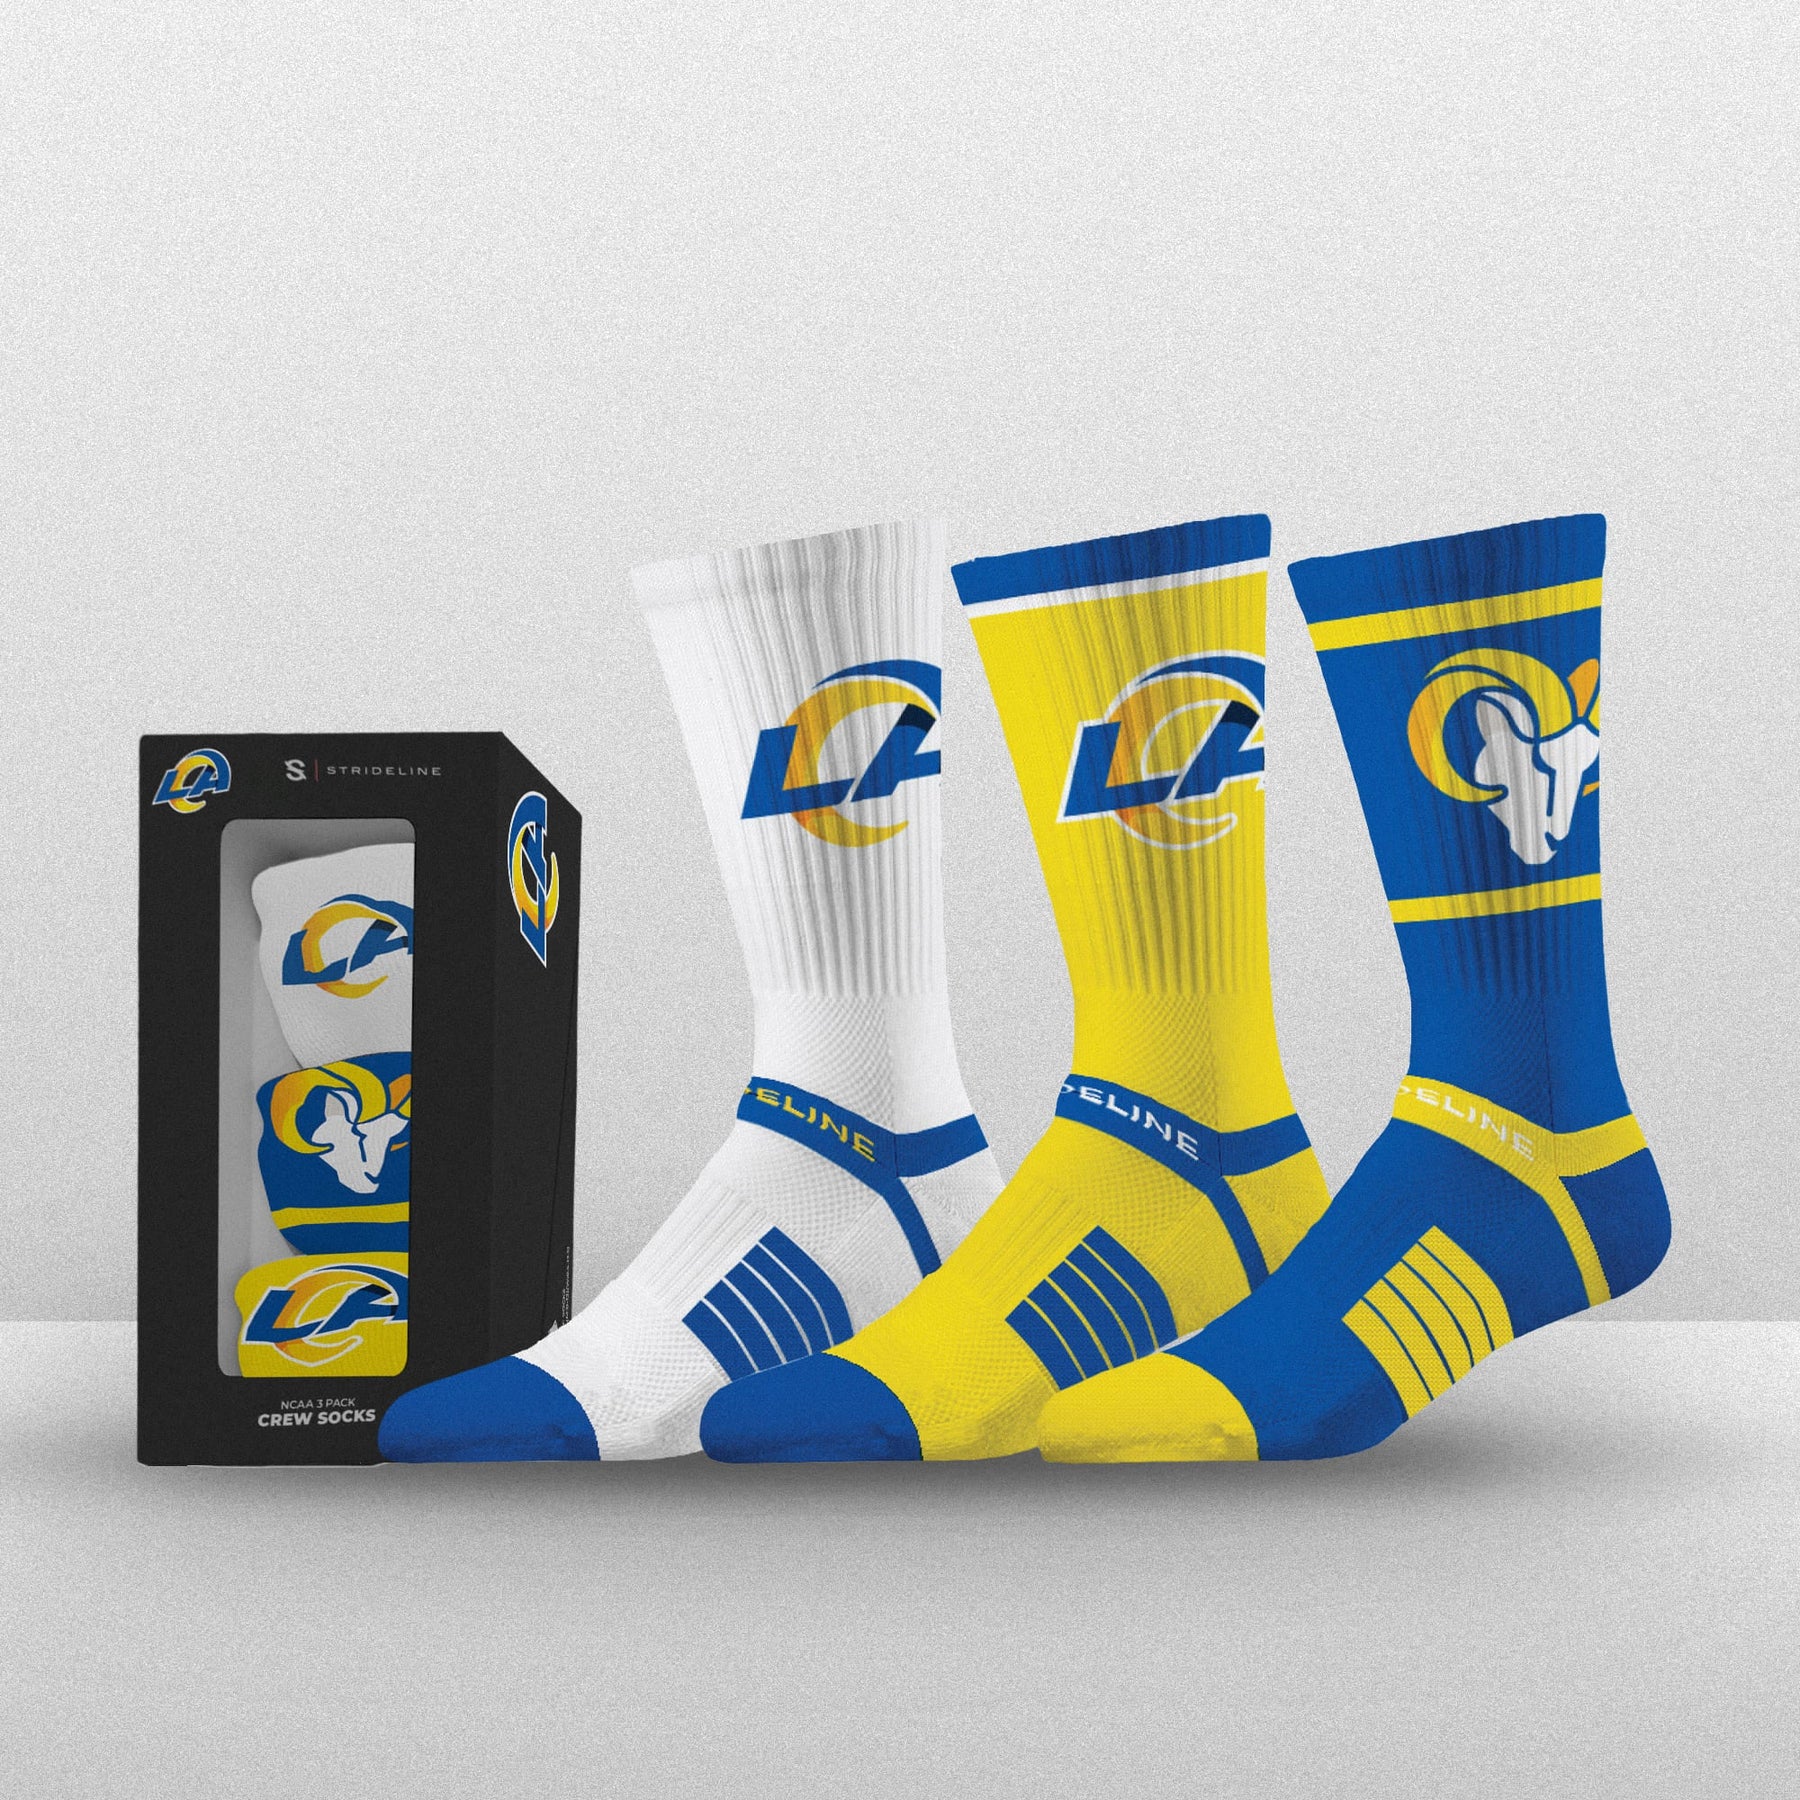 Los Angeles Rams - Performance Socks